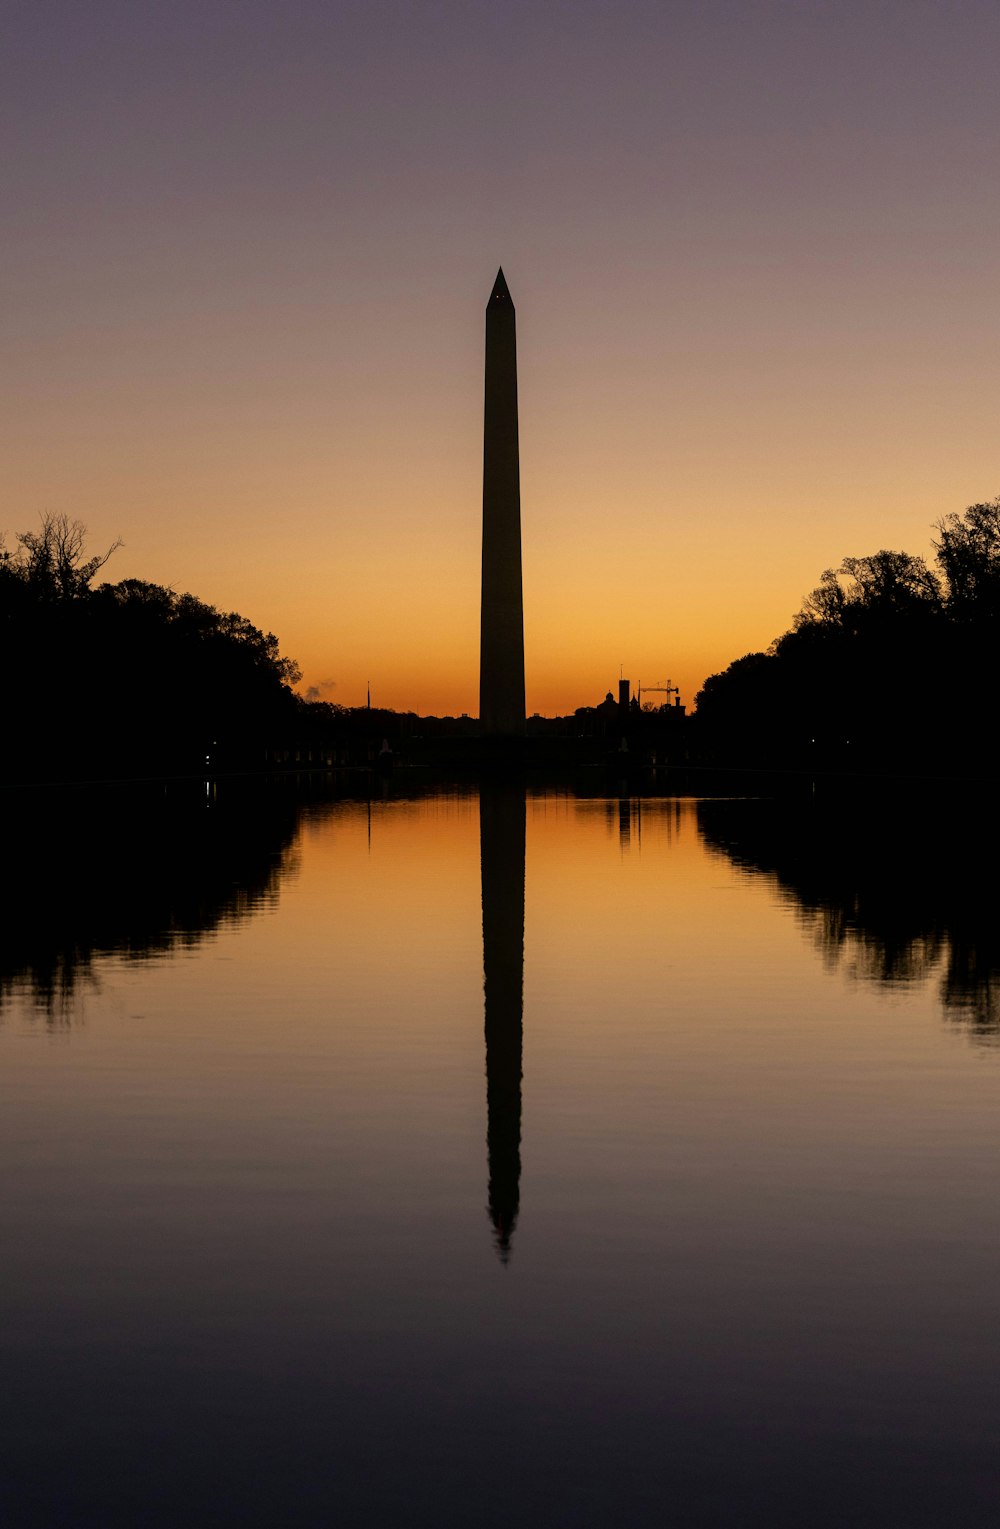 El Monumento a Washington en Washington DC al atardecer